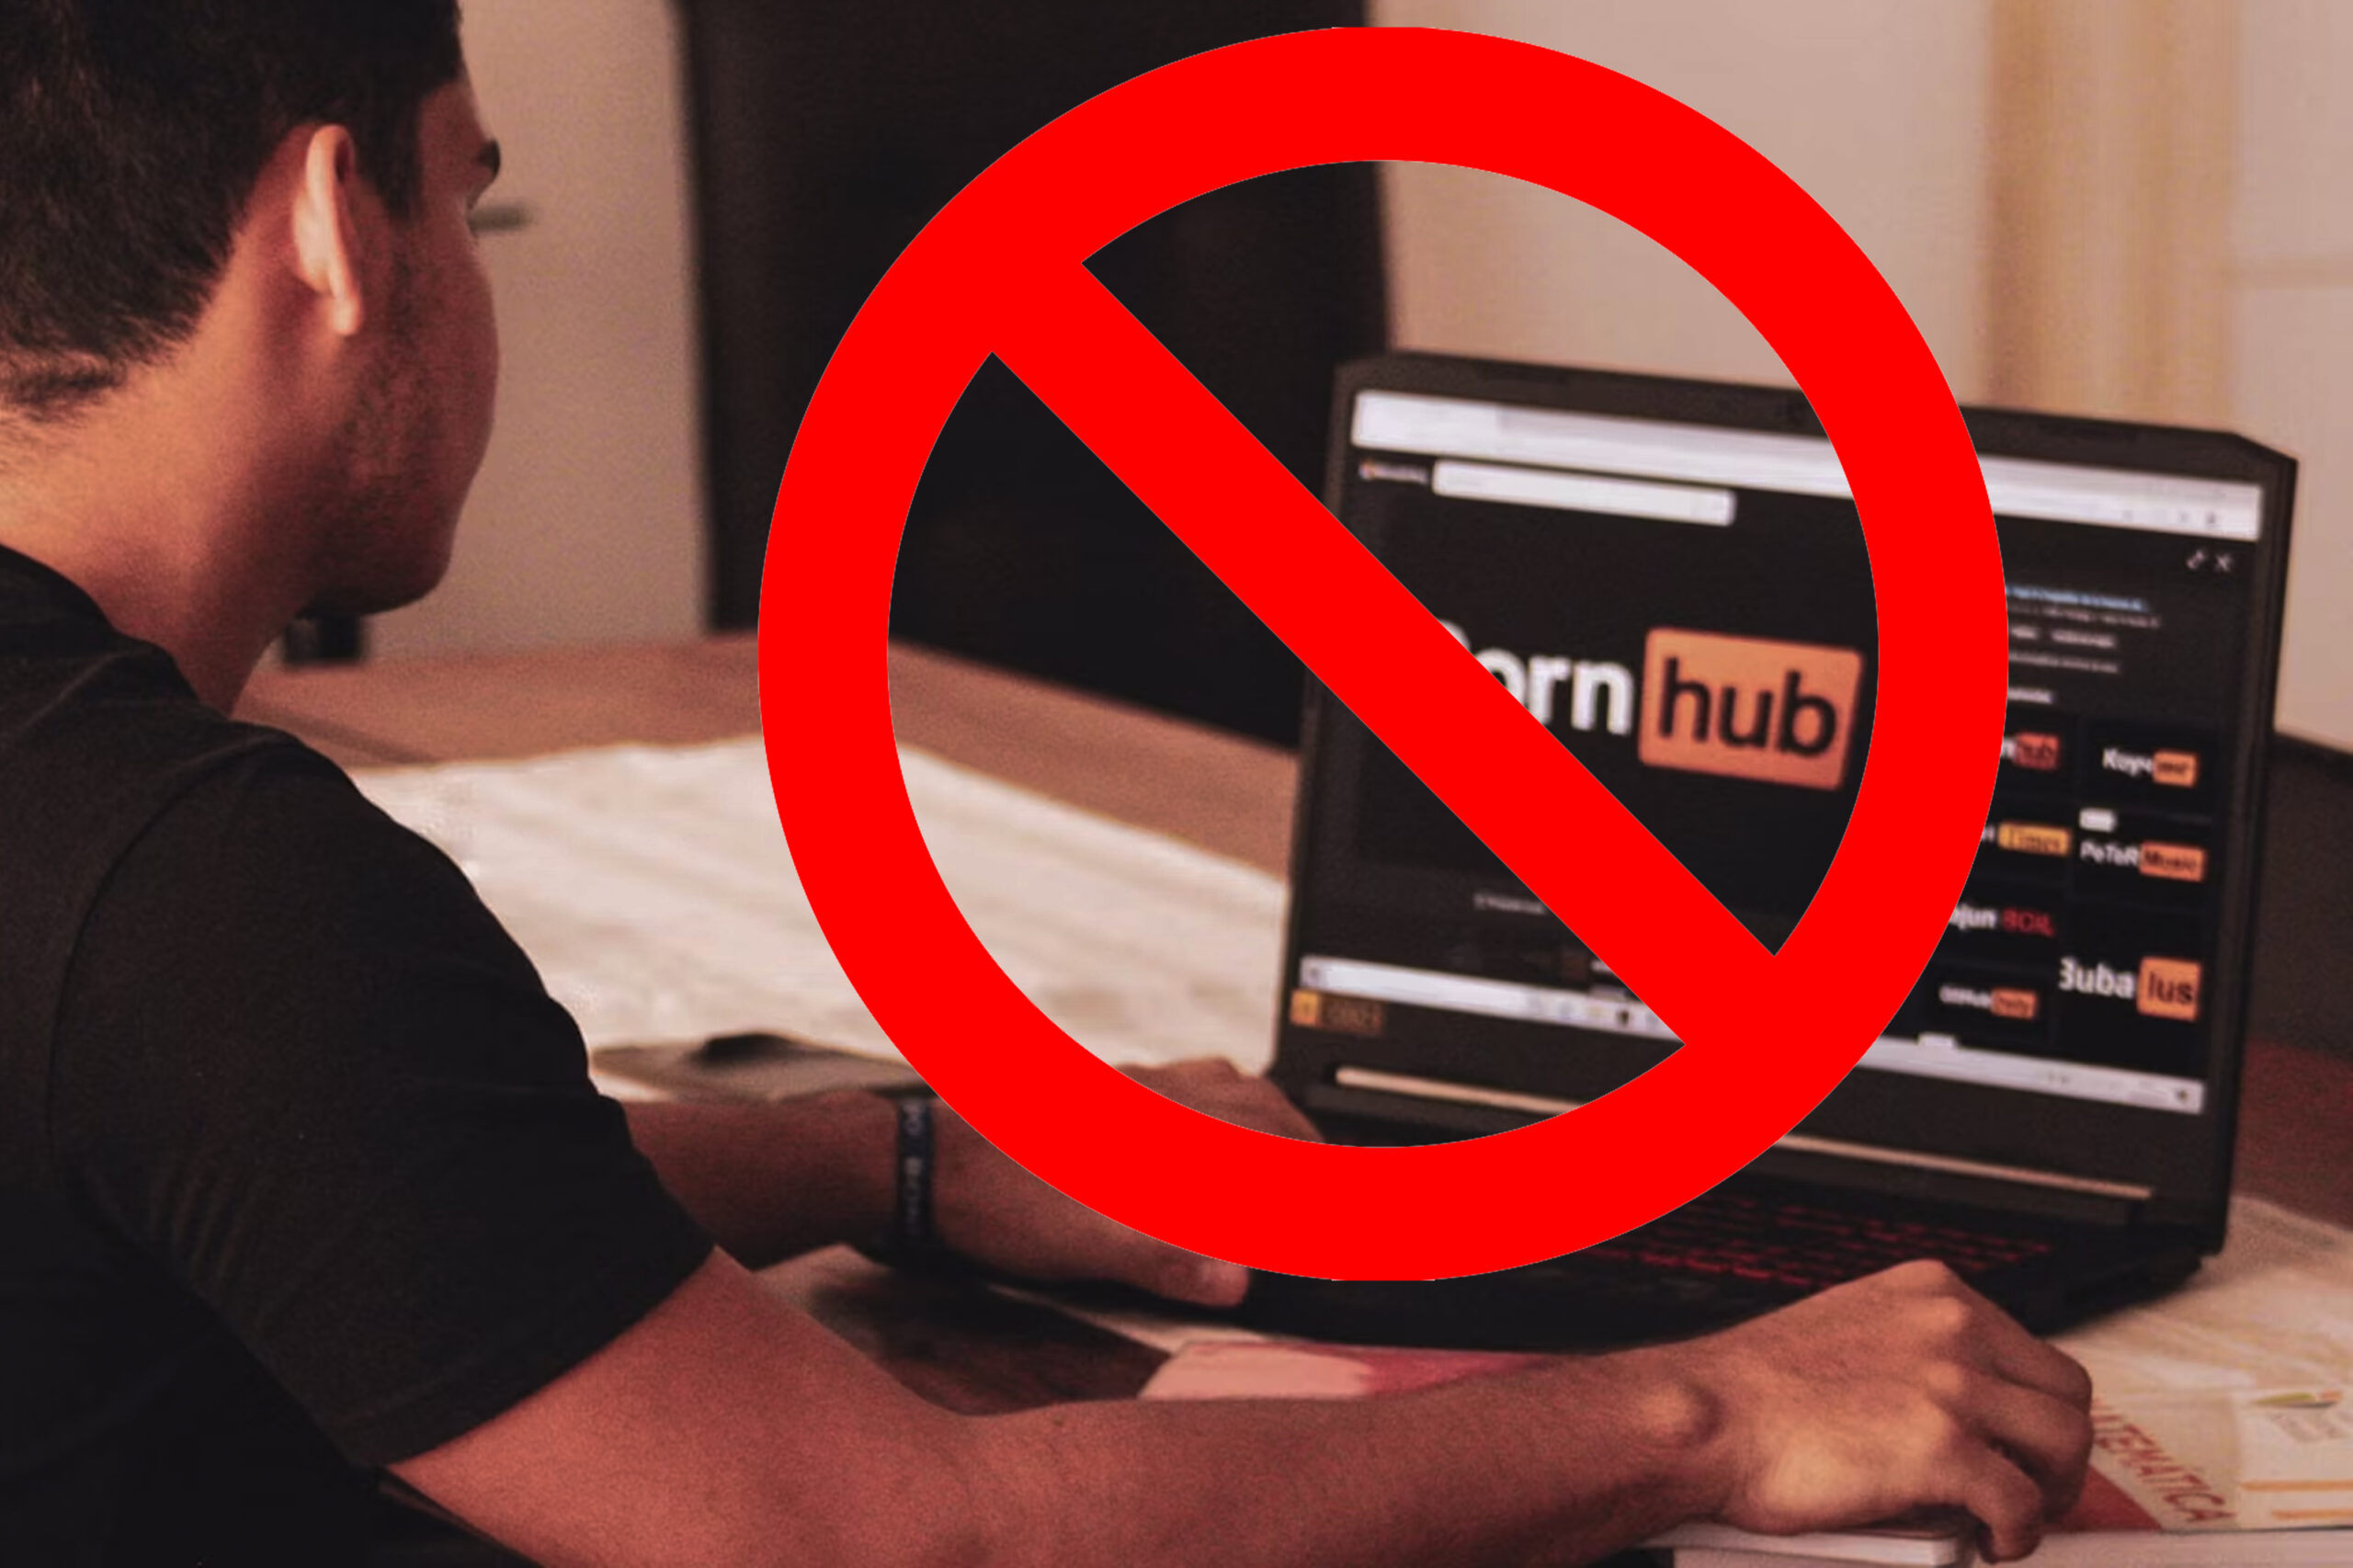 Pranhub Com - Pornhub Blocks Access In Utah Because of State's New Age Verification Law -  RELEVANT